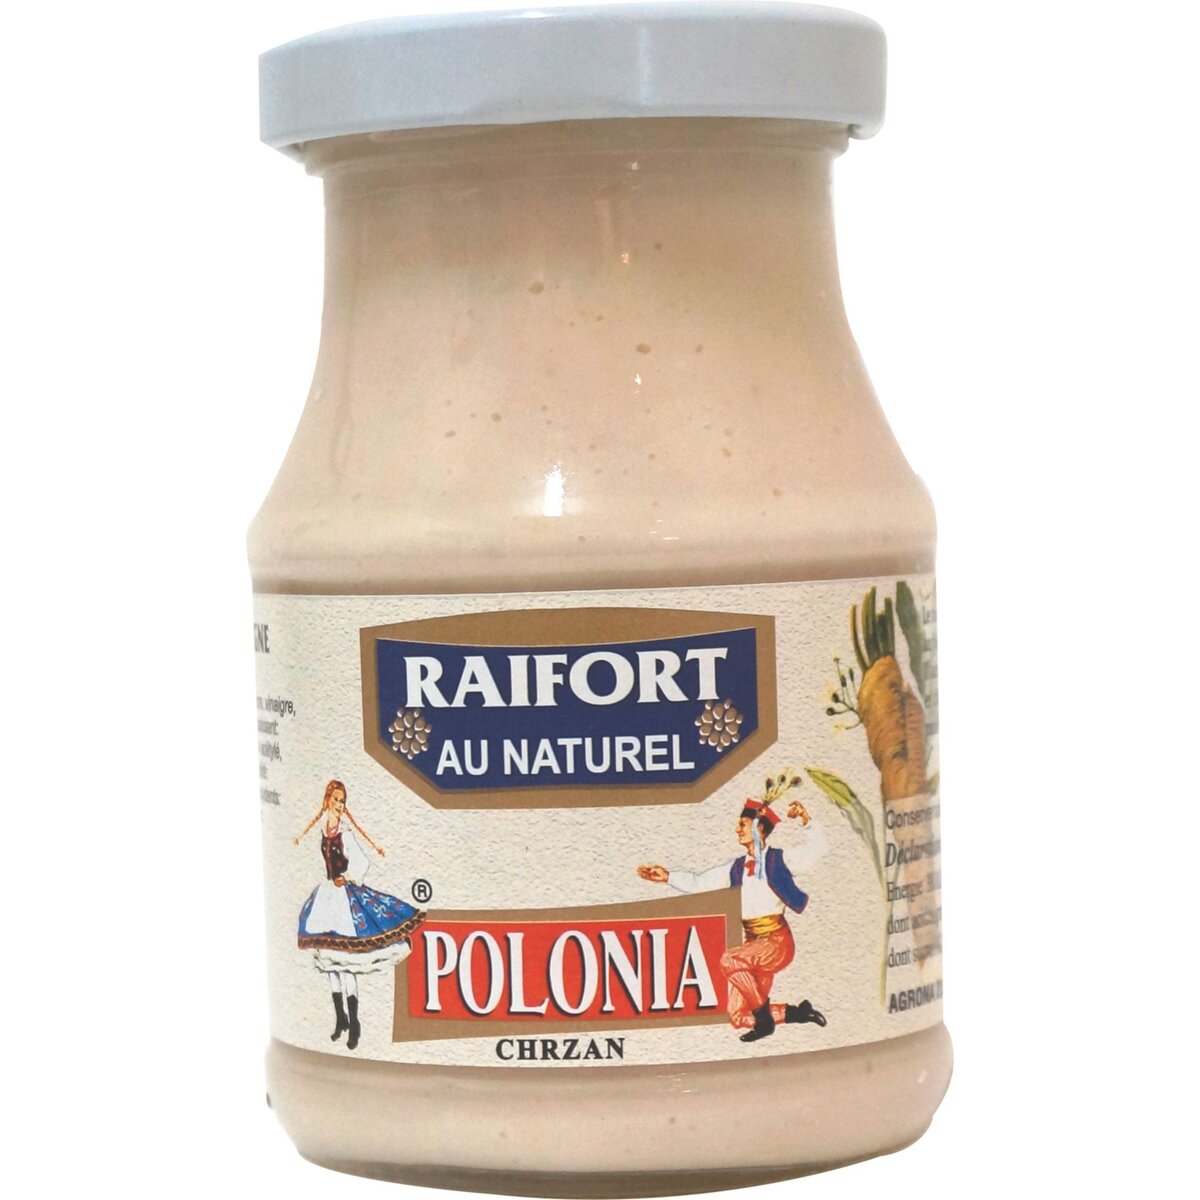 POLONIA Polonia raifort naturel bocal 200g